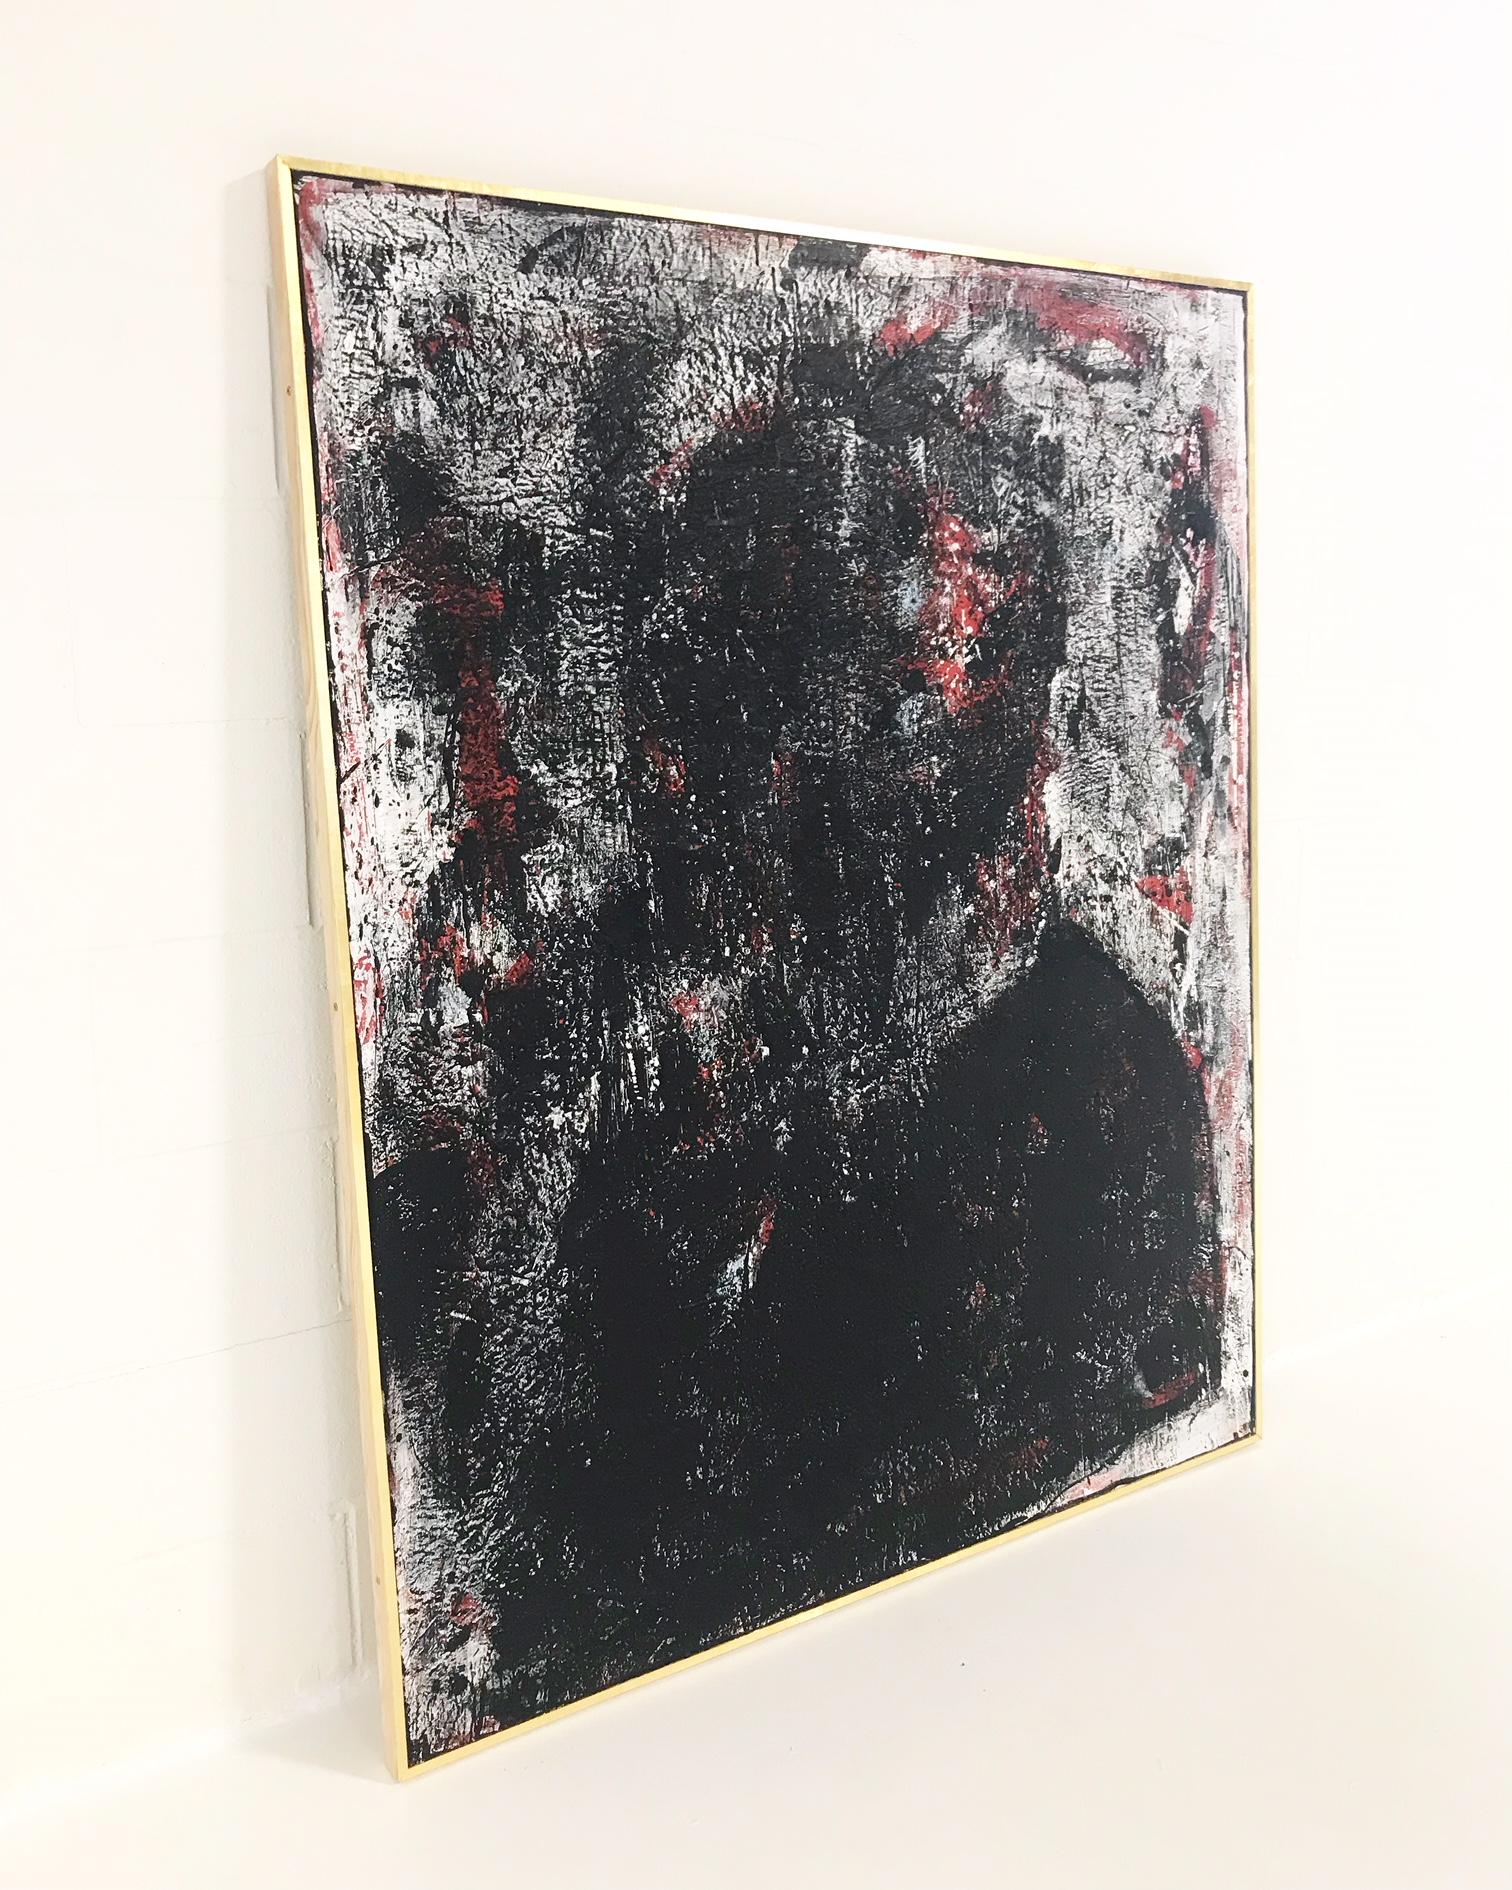 John O'Hara, 2018. Encaustic on board. Handmade frame. In series. Measures: 49 x 61